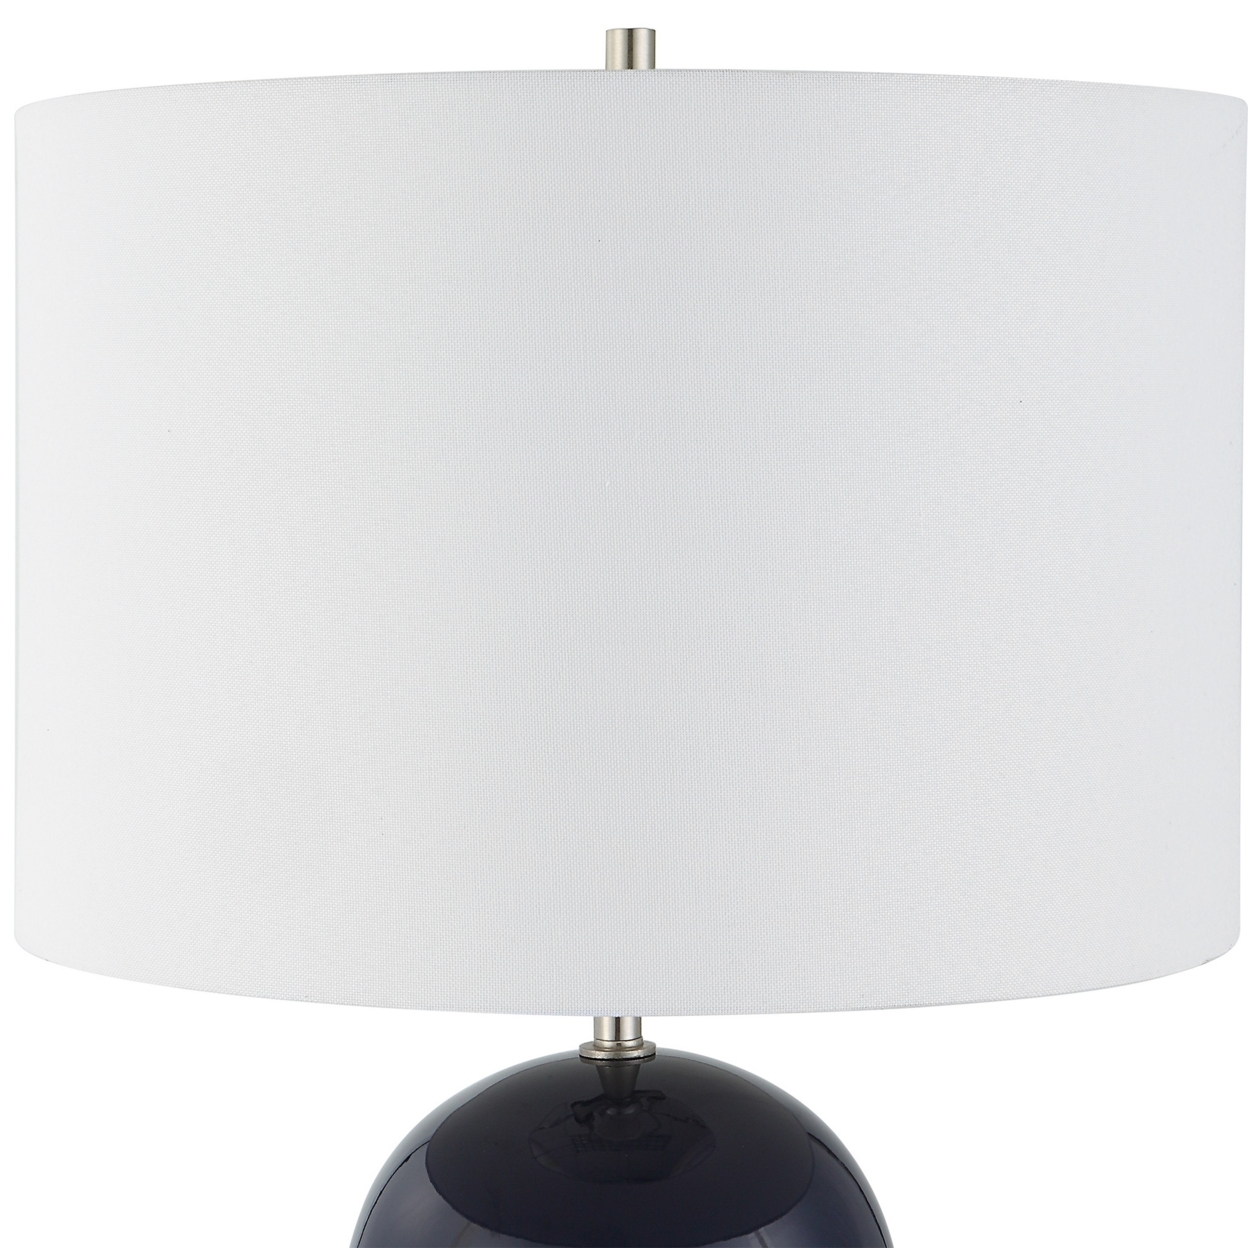 27 Inch Coastal Table Lamp With Hardback Linen Shade, Ceramic, Navy Blue- Saltoro Sherpi